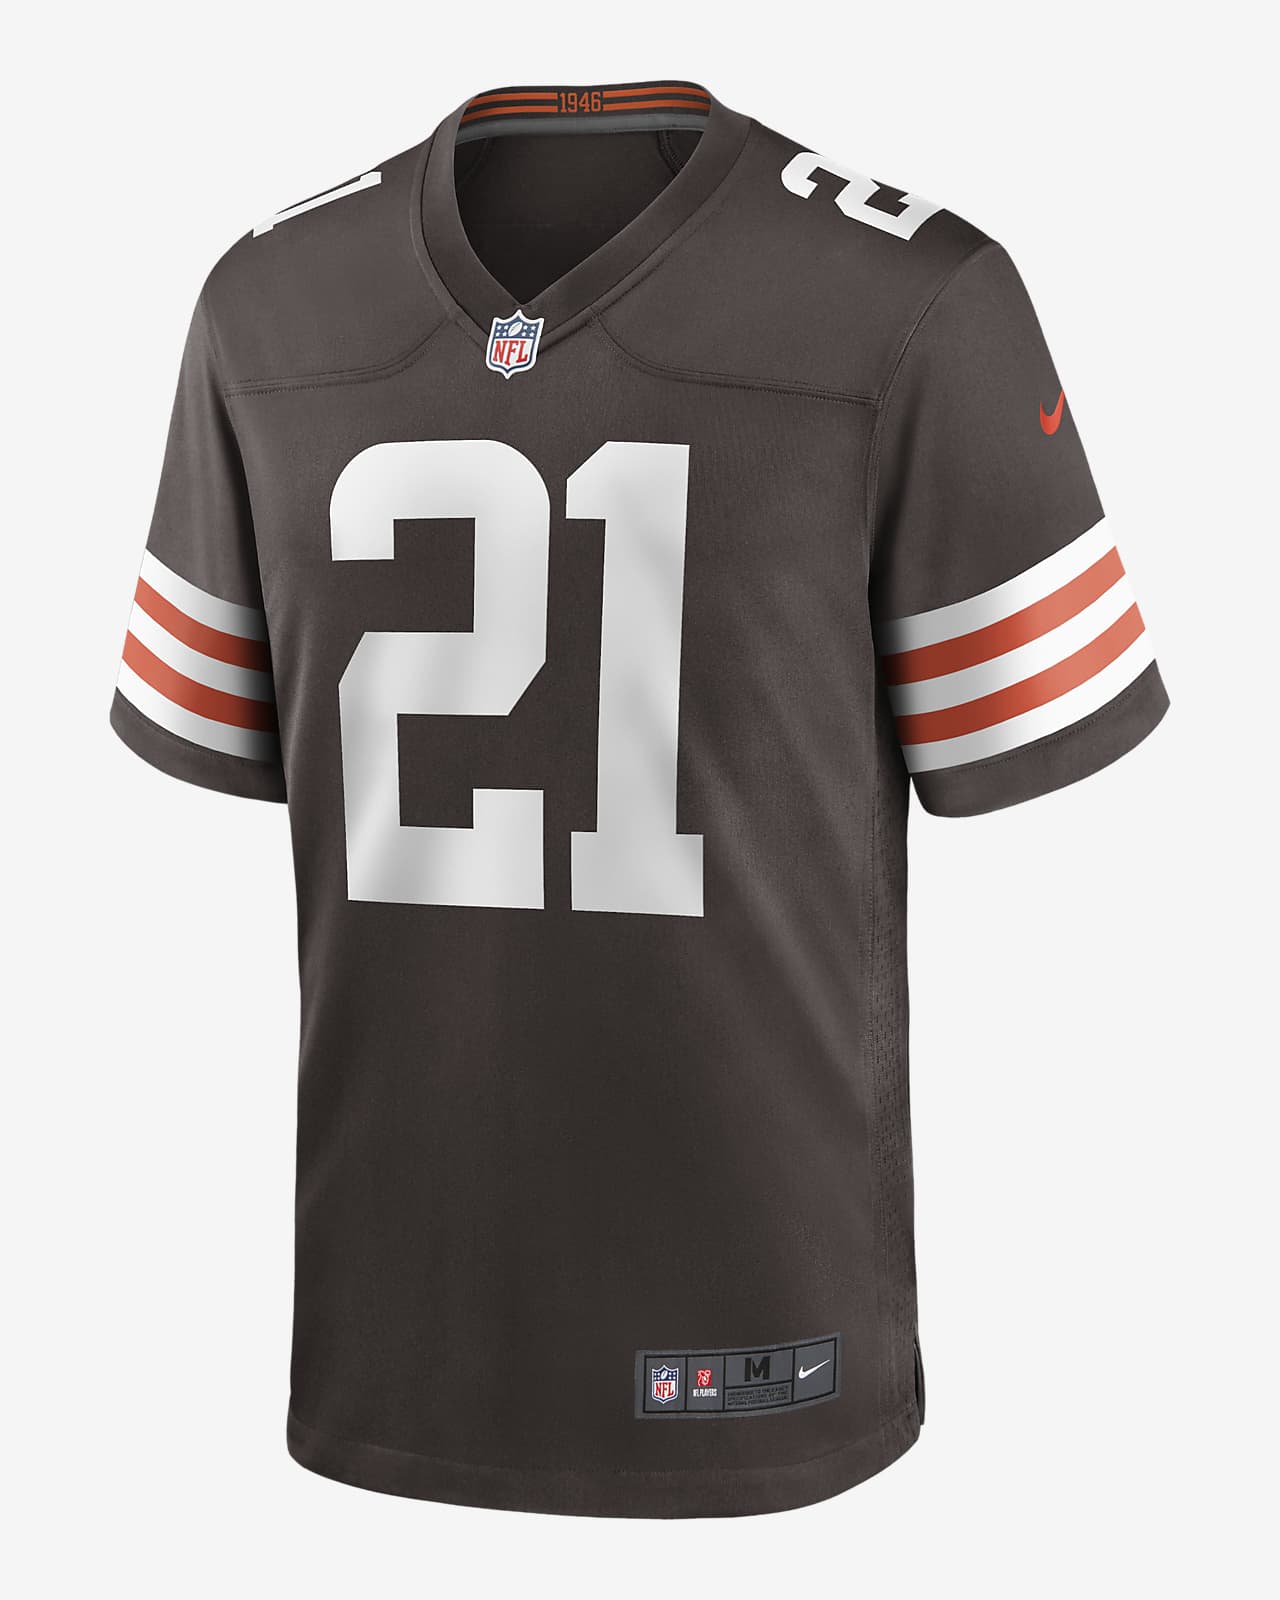 Camiseta de fútbol americano Game para hombre NFL Cleveland Browns (Denzel Ward)